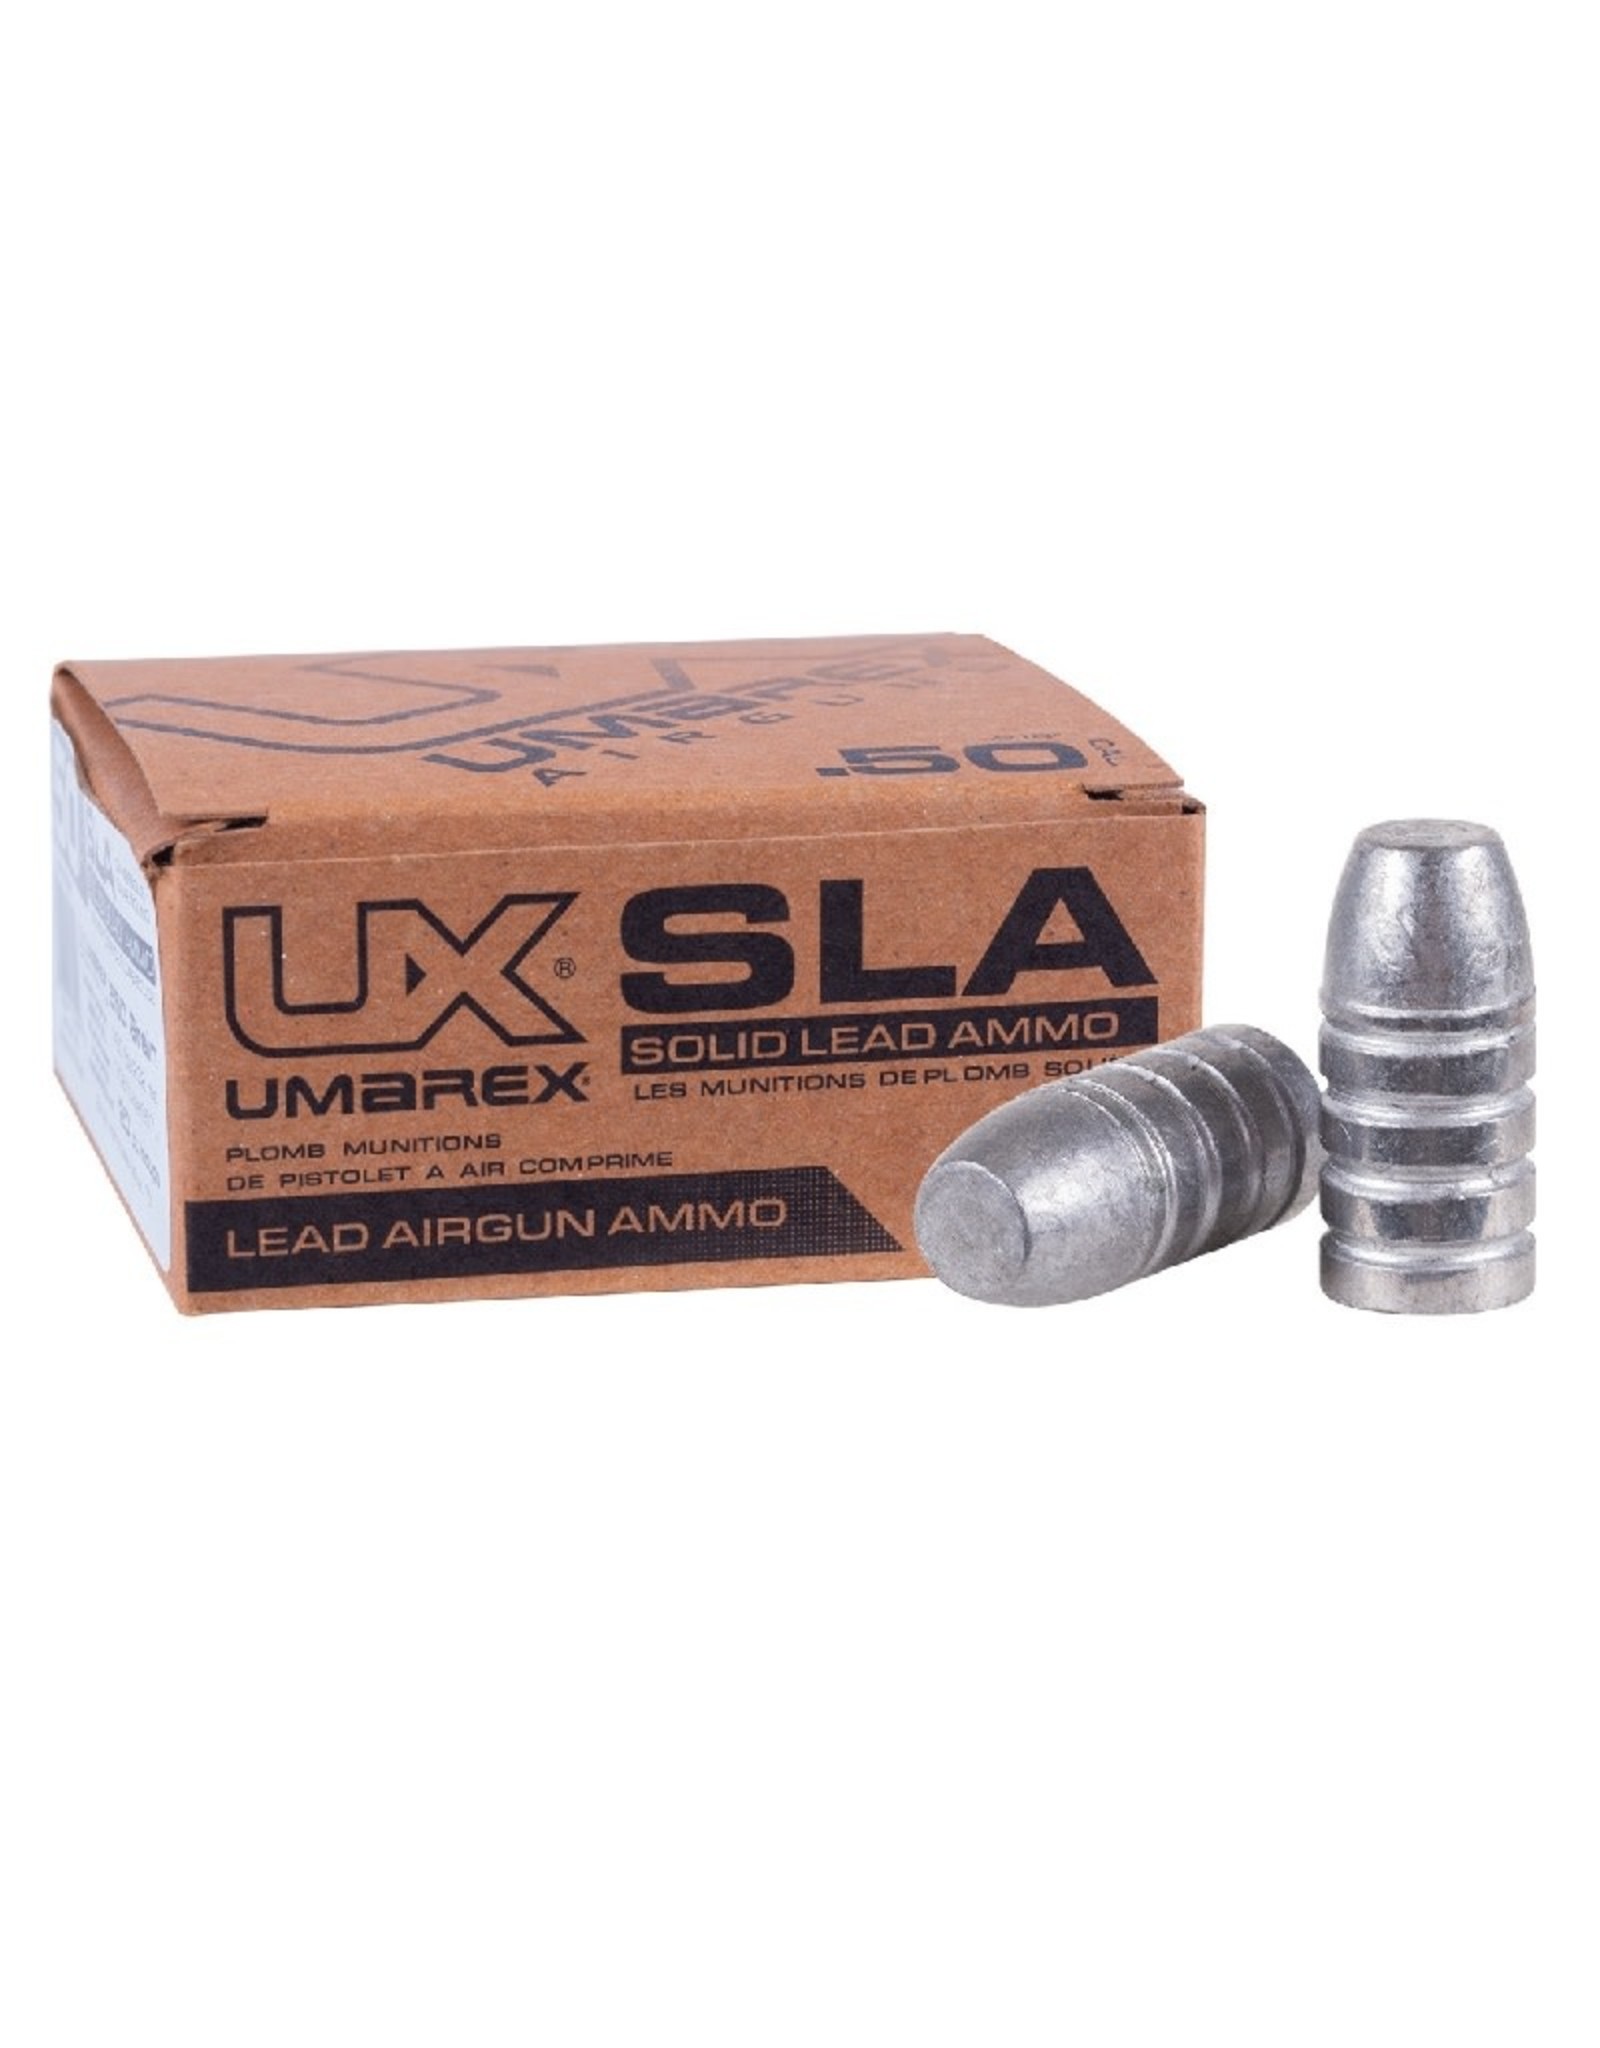 Umarex SLA - Solid Lead Ammo - .510/.50 cal, 550 grain (20ct.) by Umarex - single